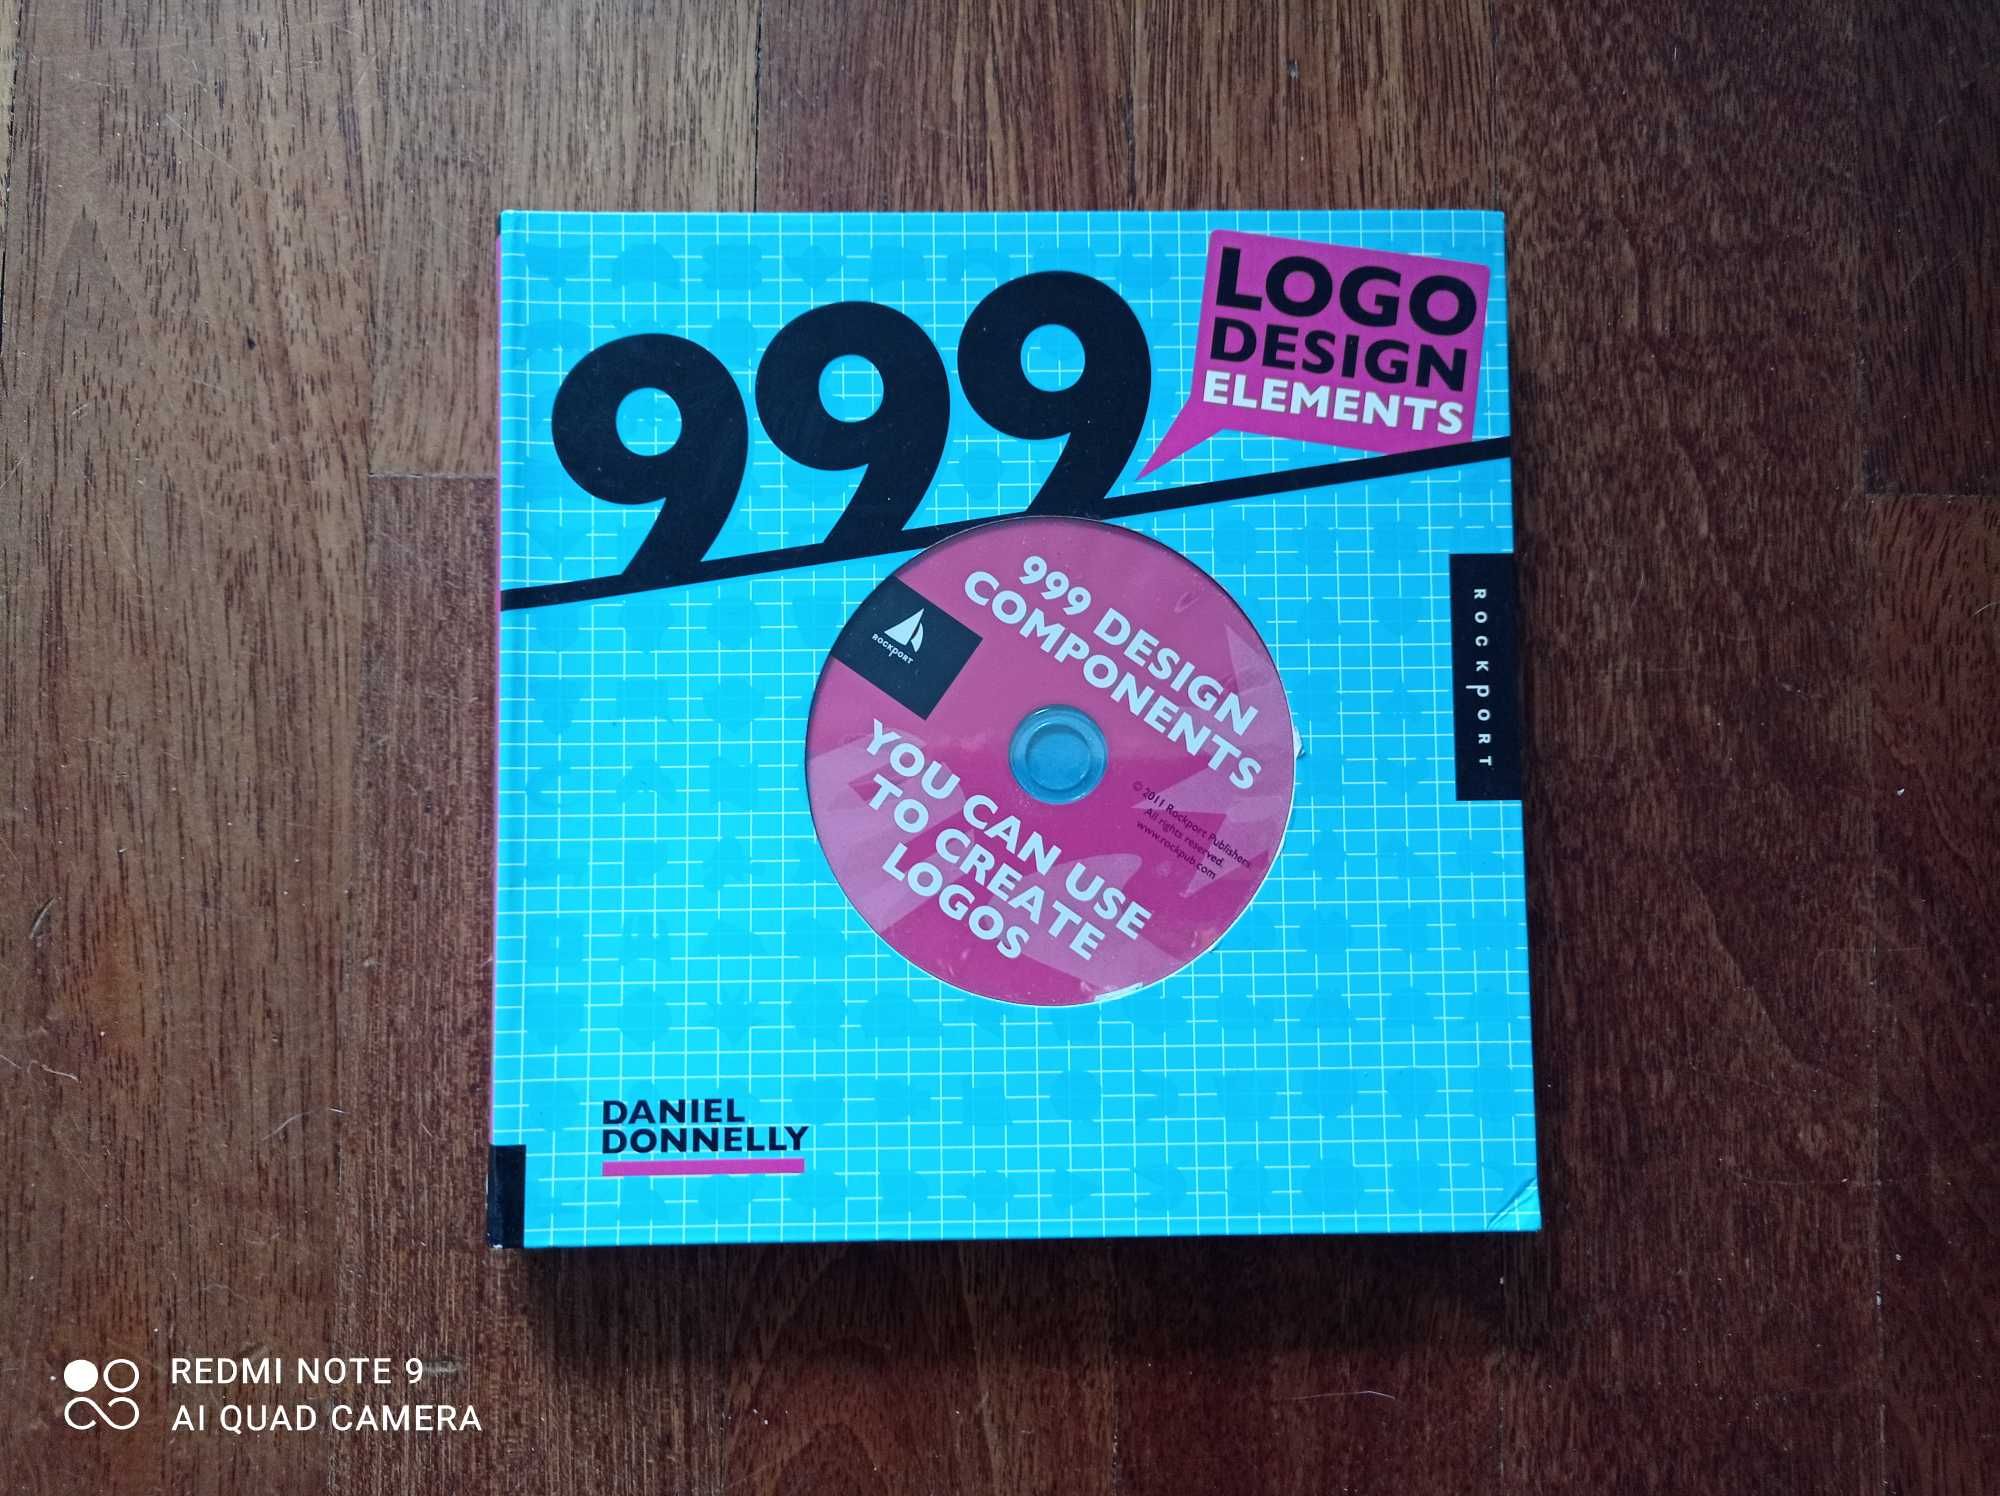 999 LOGO DESIGNS Elements praktyczny poradnik + płyta CD Donnelly